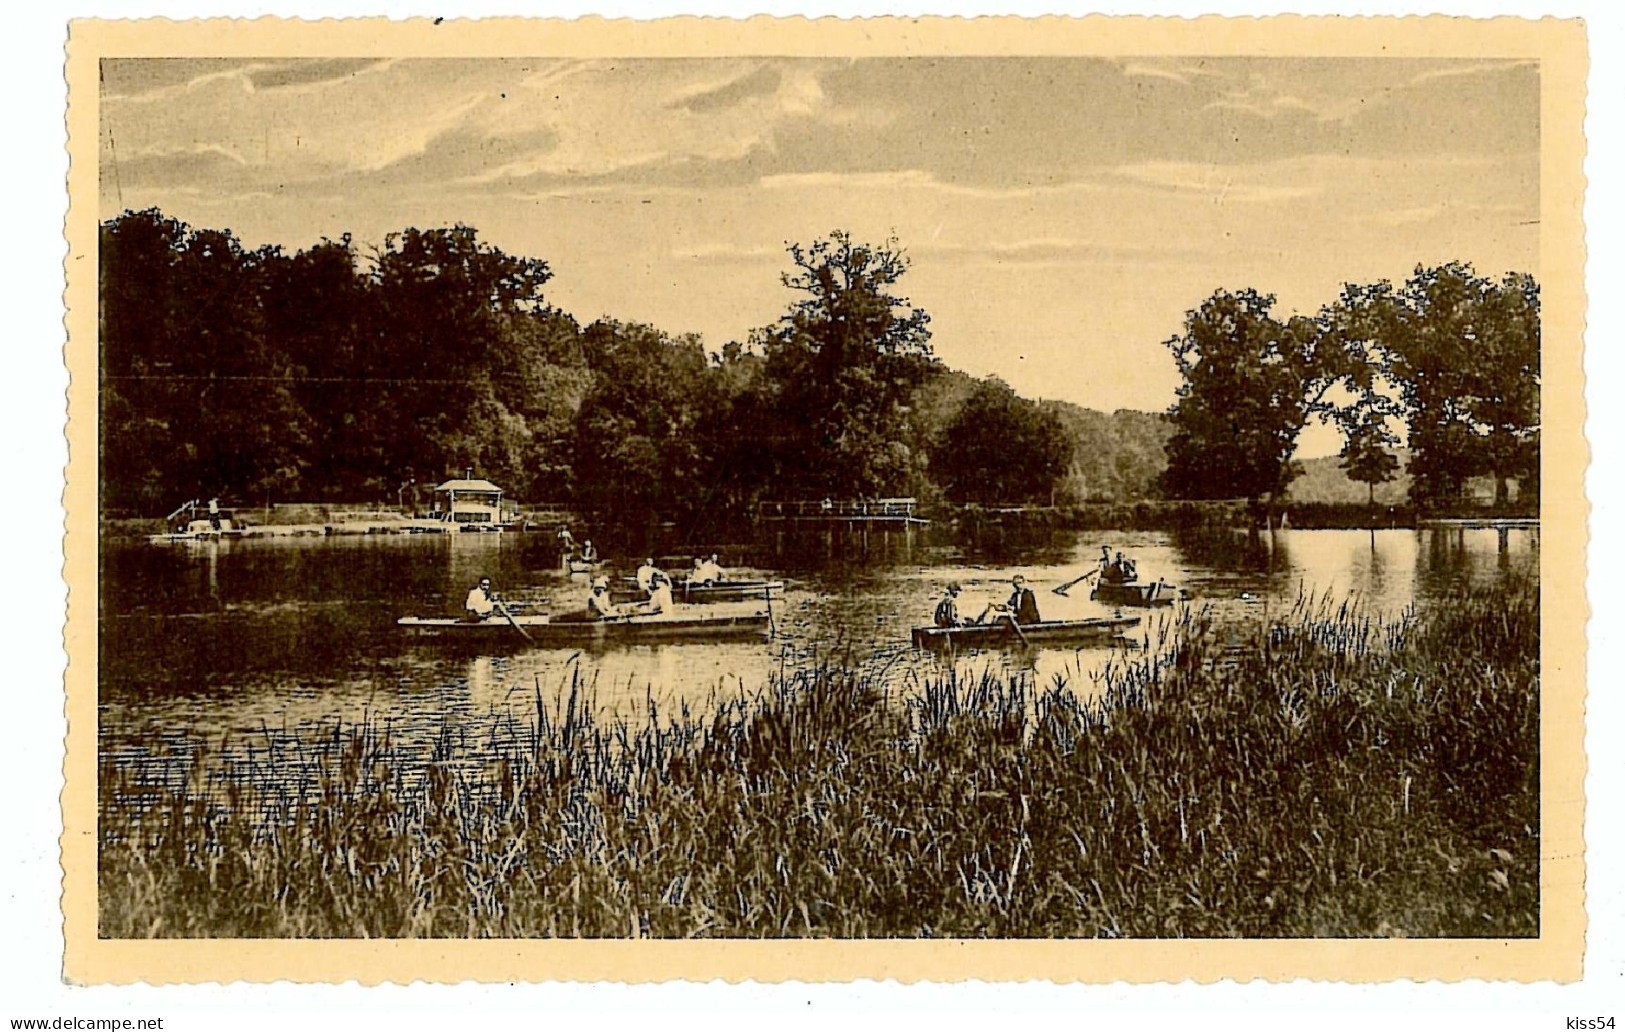 RO 81 - 875  SIBIU, Lacul Dumbravei, Romania - Old Postcard - Unused - Romania